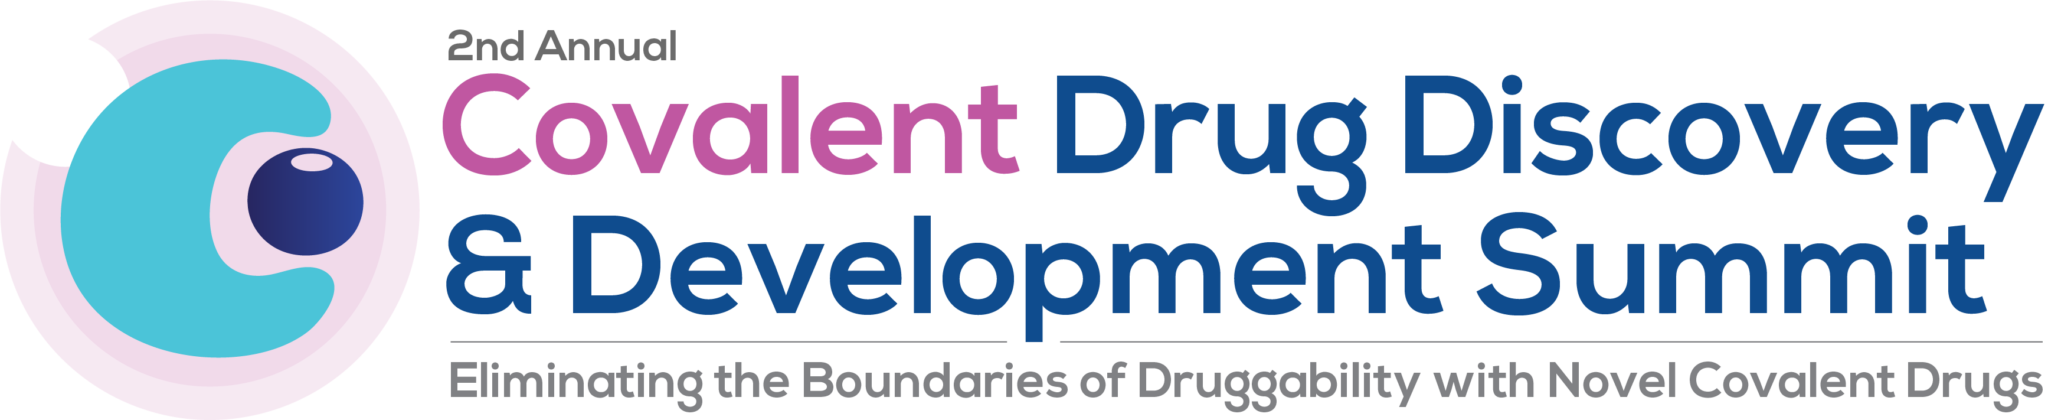 Covalent Drug Discovery & Development